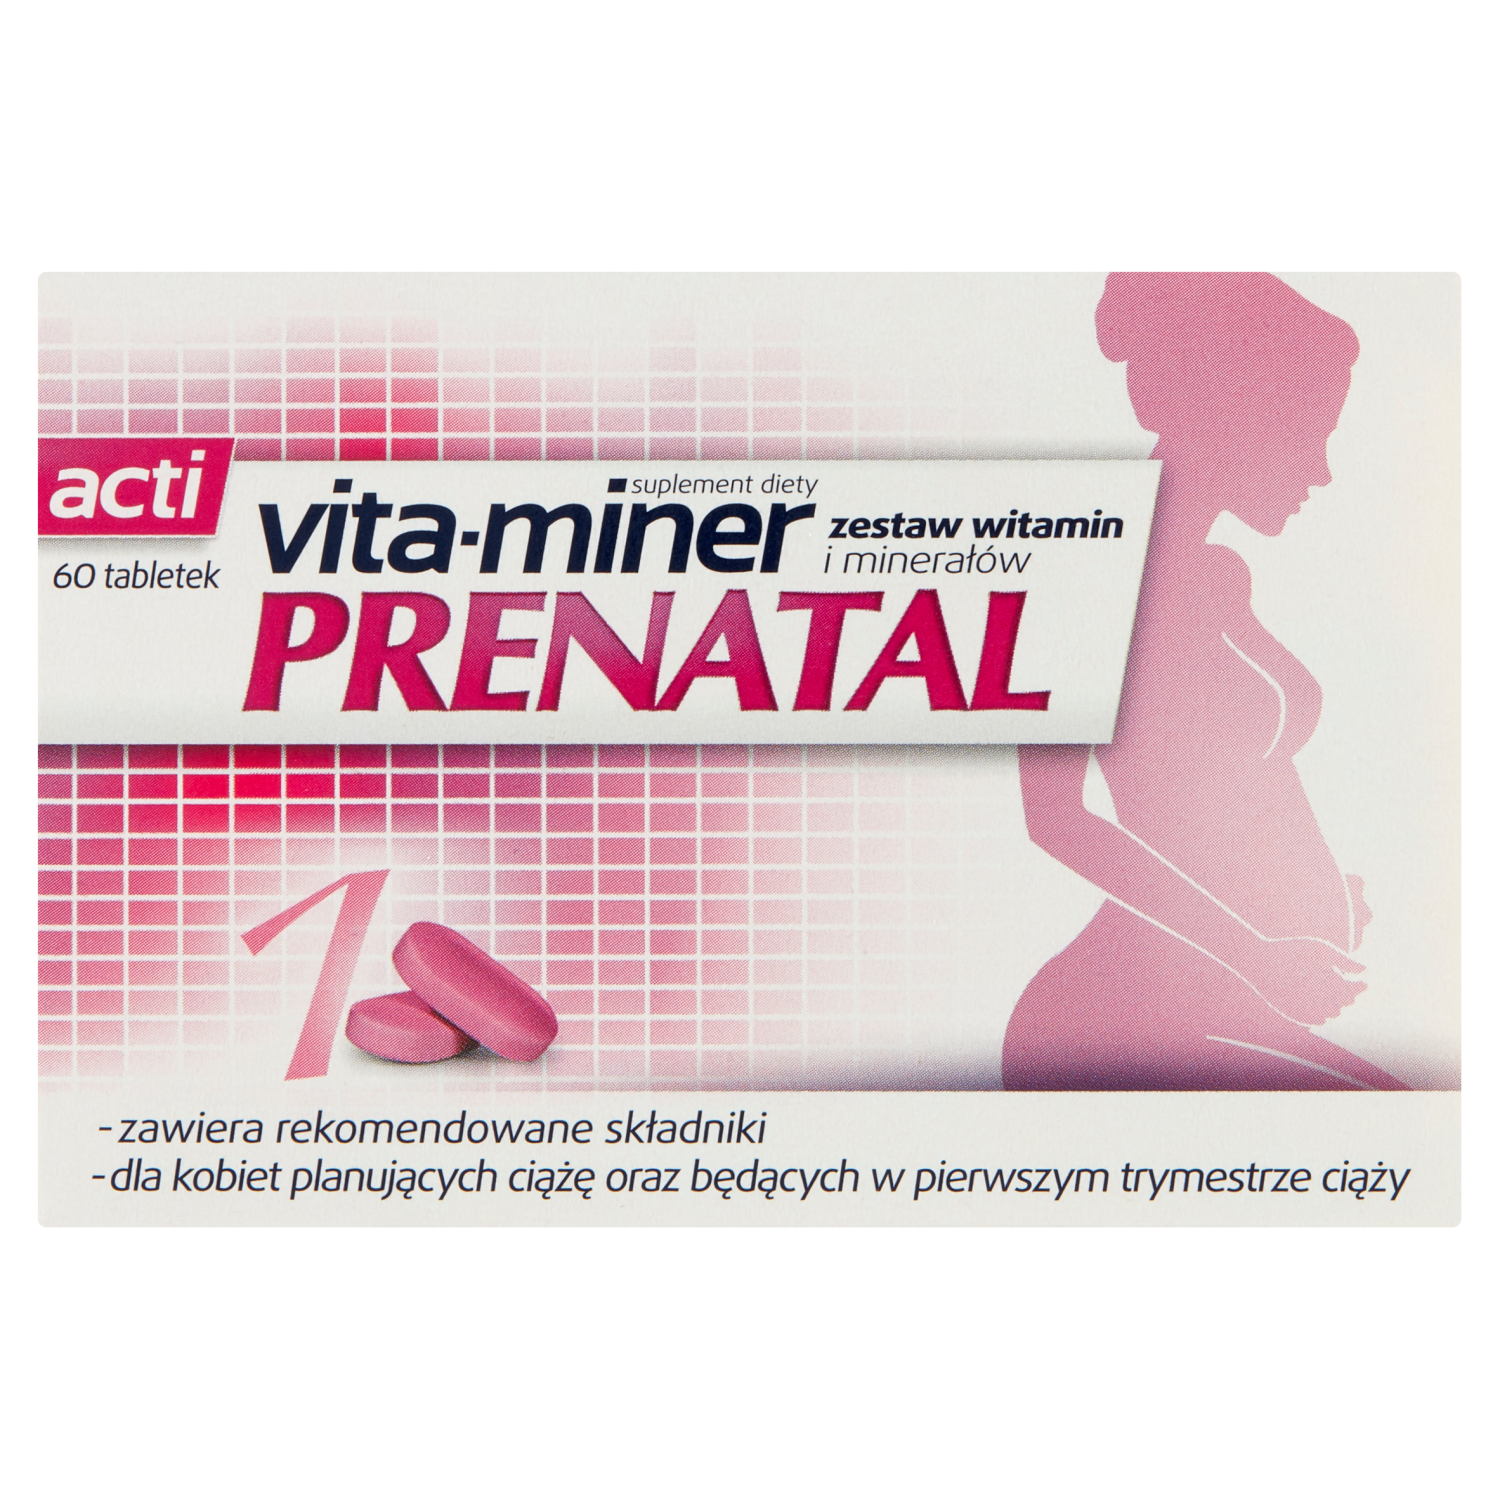 vita miner prenatal биологически активная добавка 60 таблеток 1 упаковка Vita-Miner Prenatal биологически активная добавка, 60 таблеток/1 упаковка